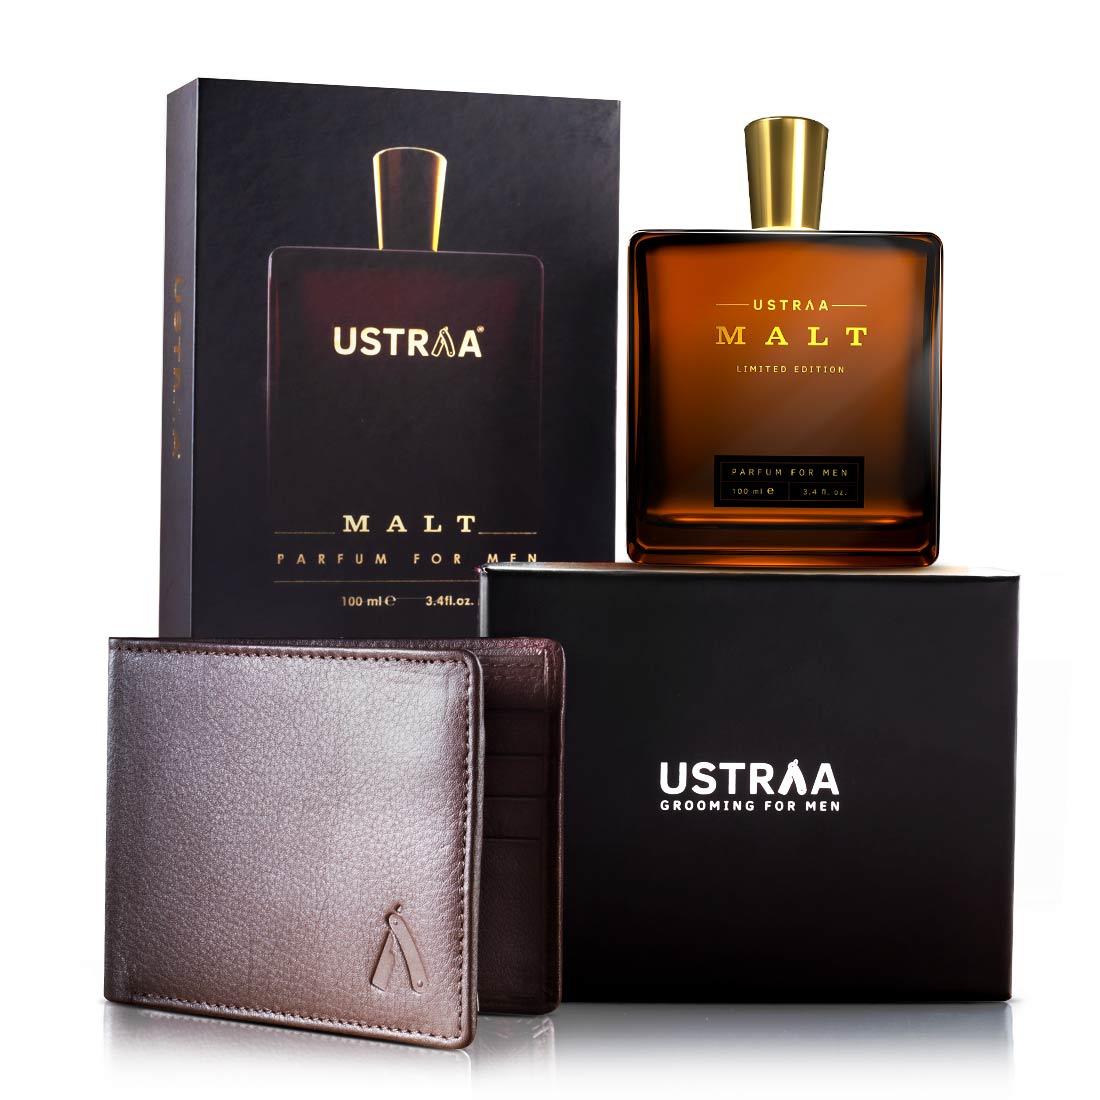 Ustraa Wallet & Malt - Perfume for Men